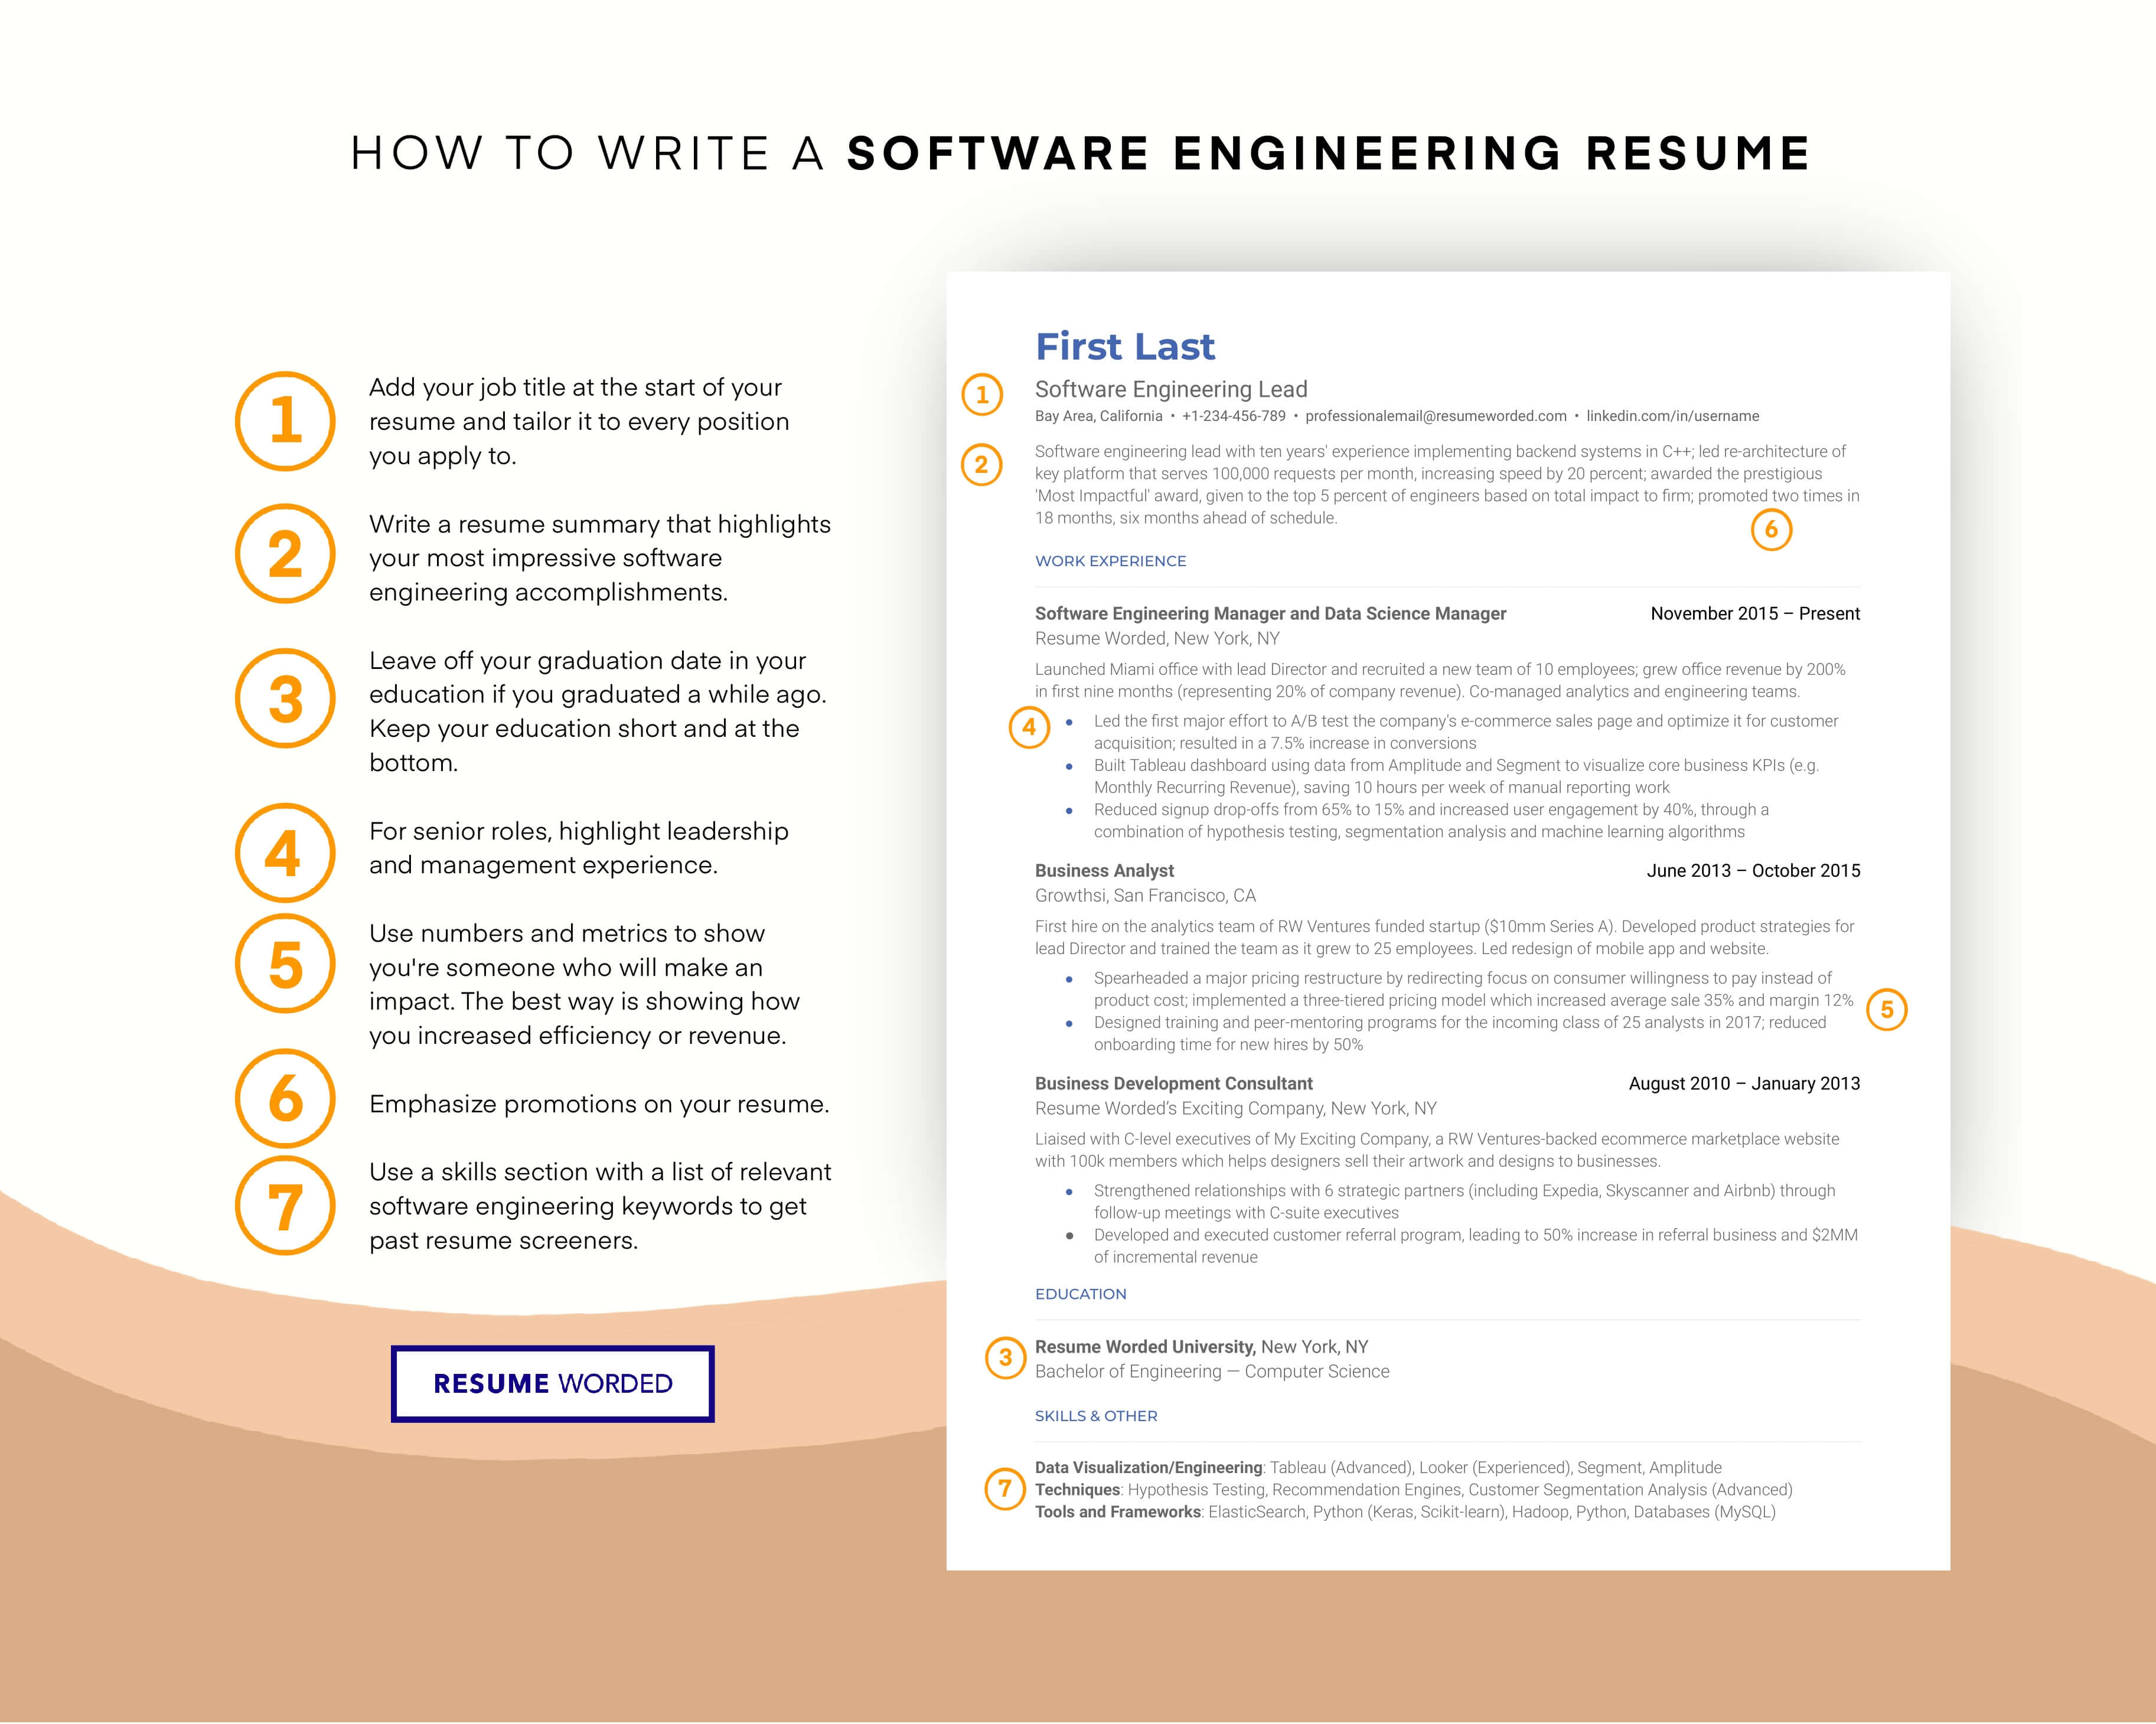 Mention your software proficiency - Design Engineer CV